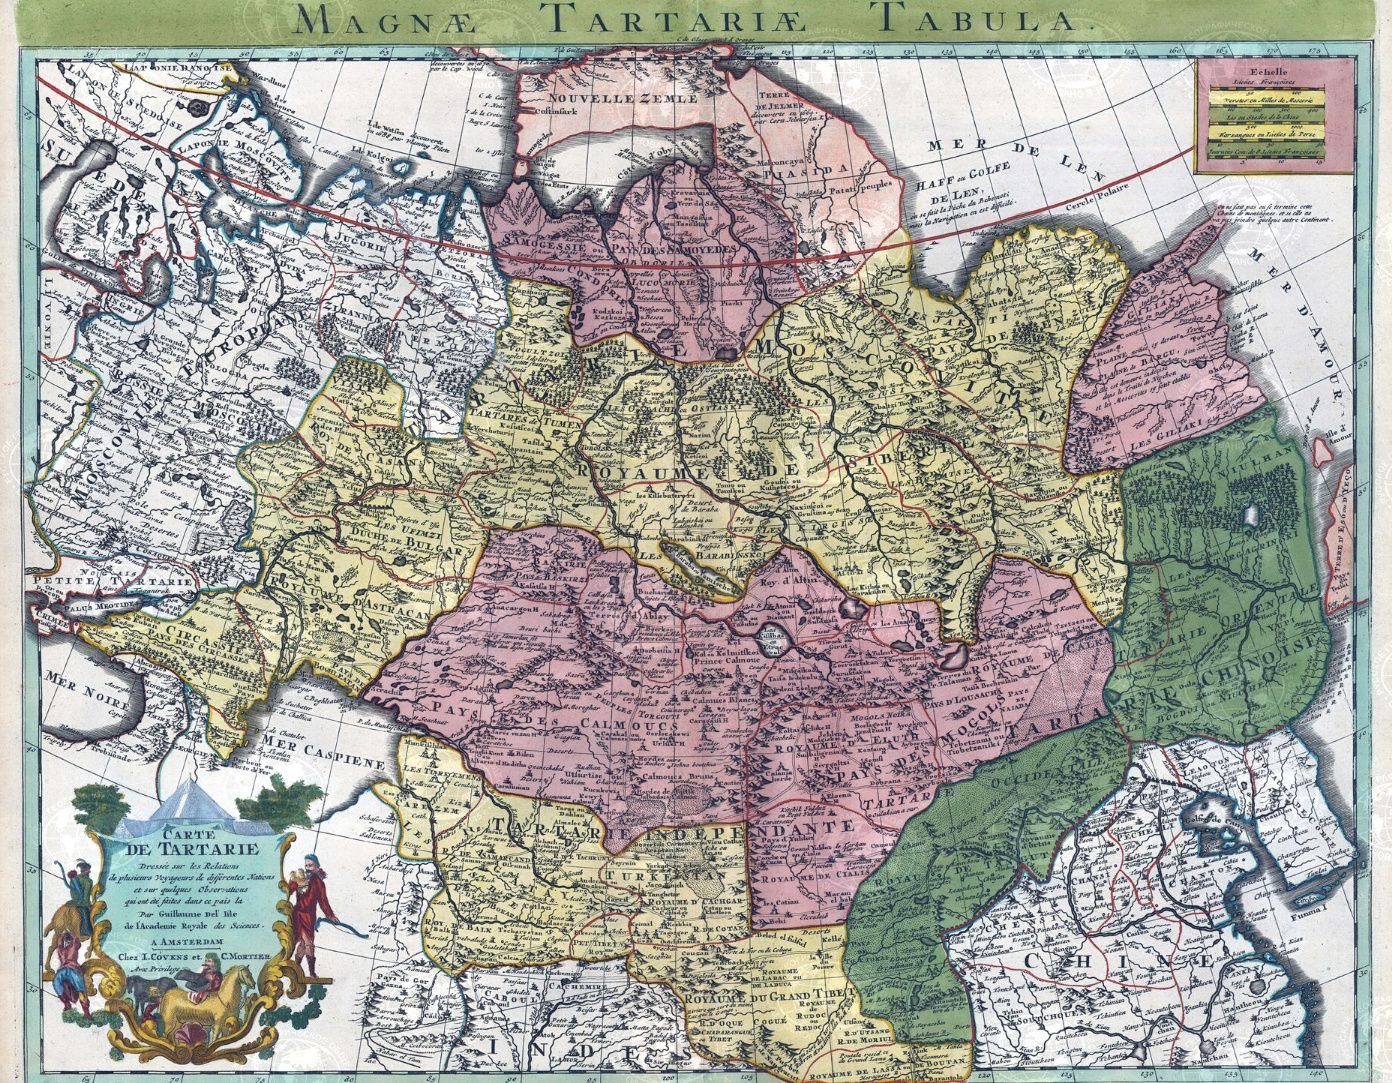 Carte de Tartarie. [Magnae Tartarie Tabula], 1730-1739 гг. Геопортал РГО, https://geoportal.rgo.ru/record/88